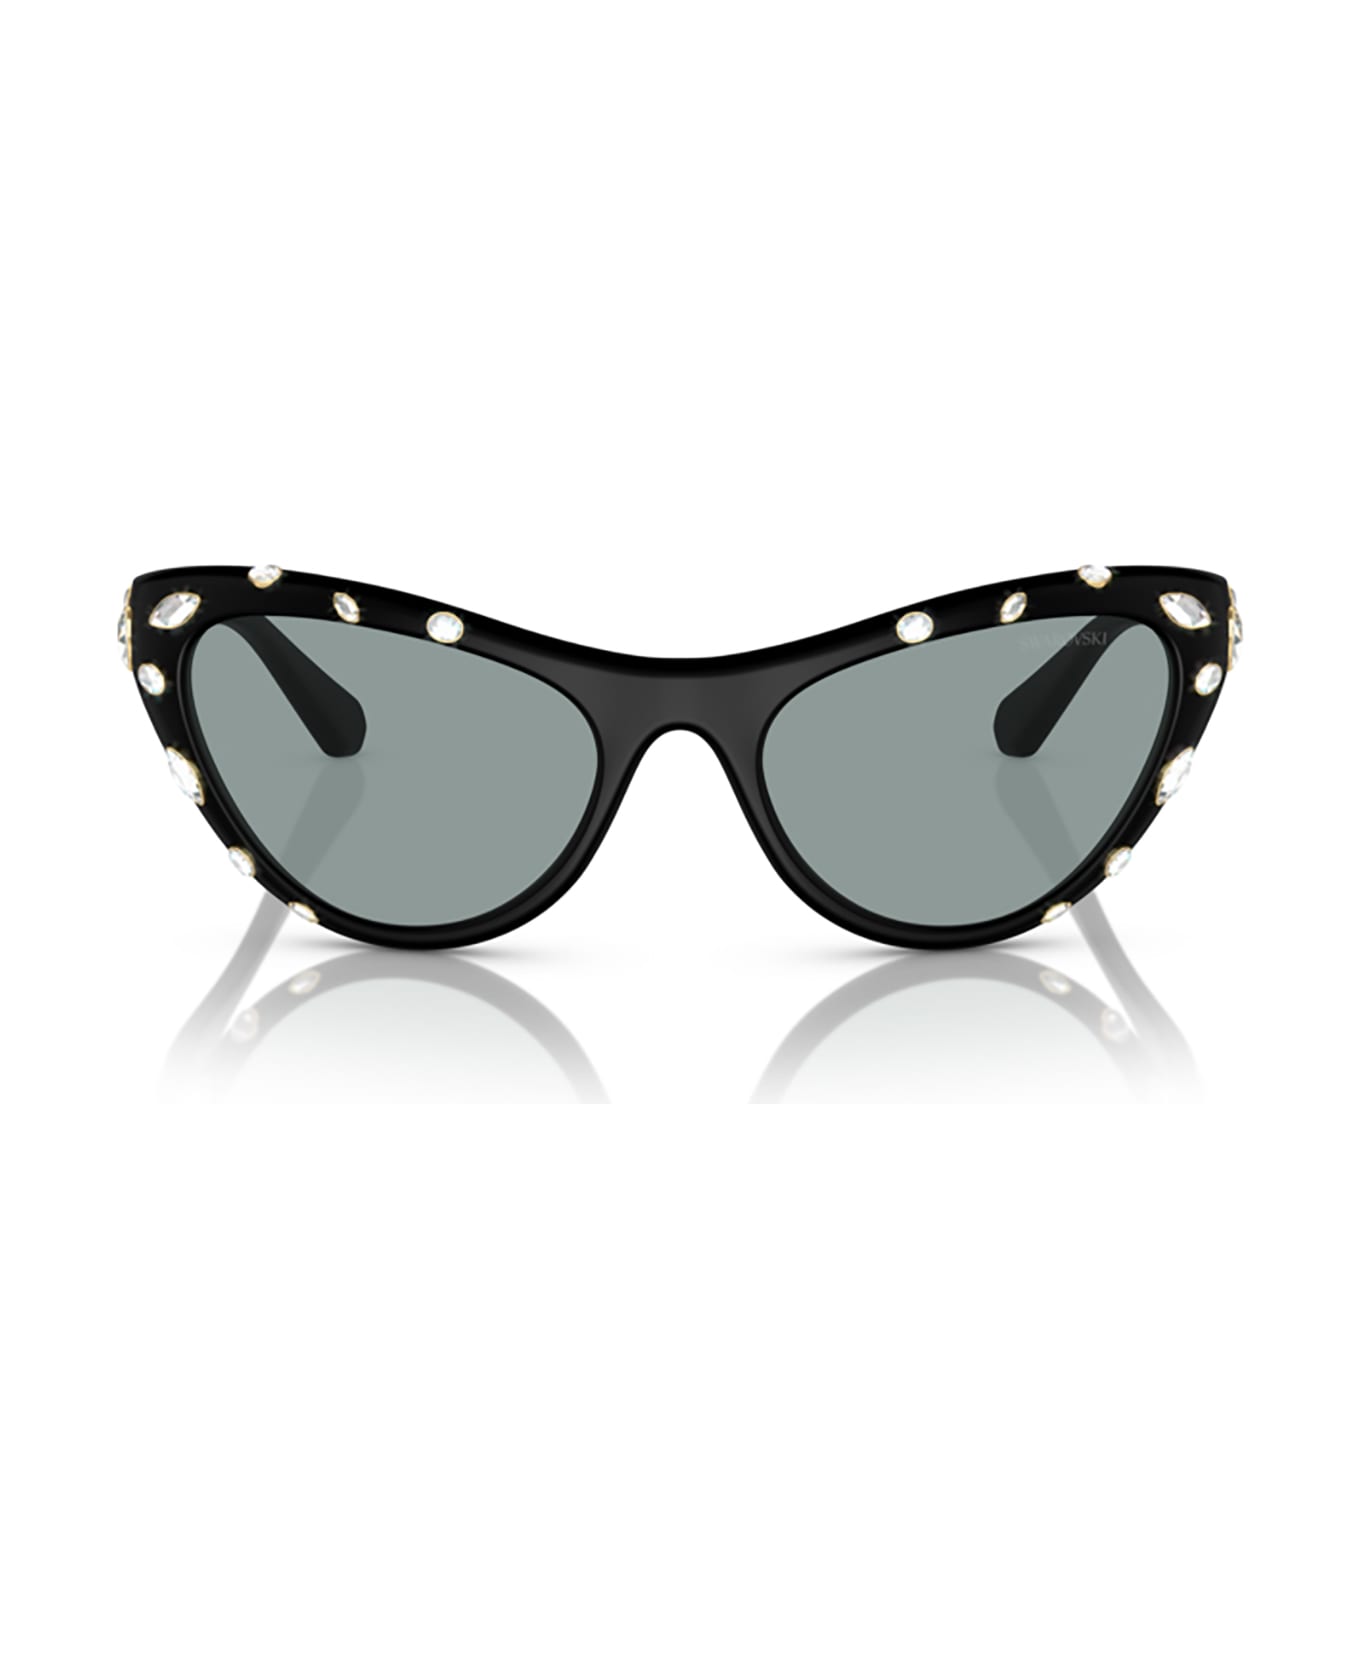 Swarovski Sk6007 Matte Black Sunglasses - Matte Black サングラス